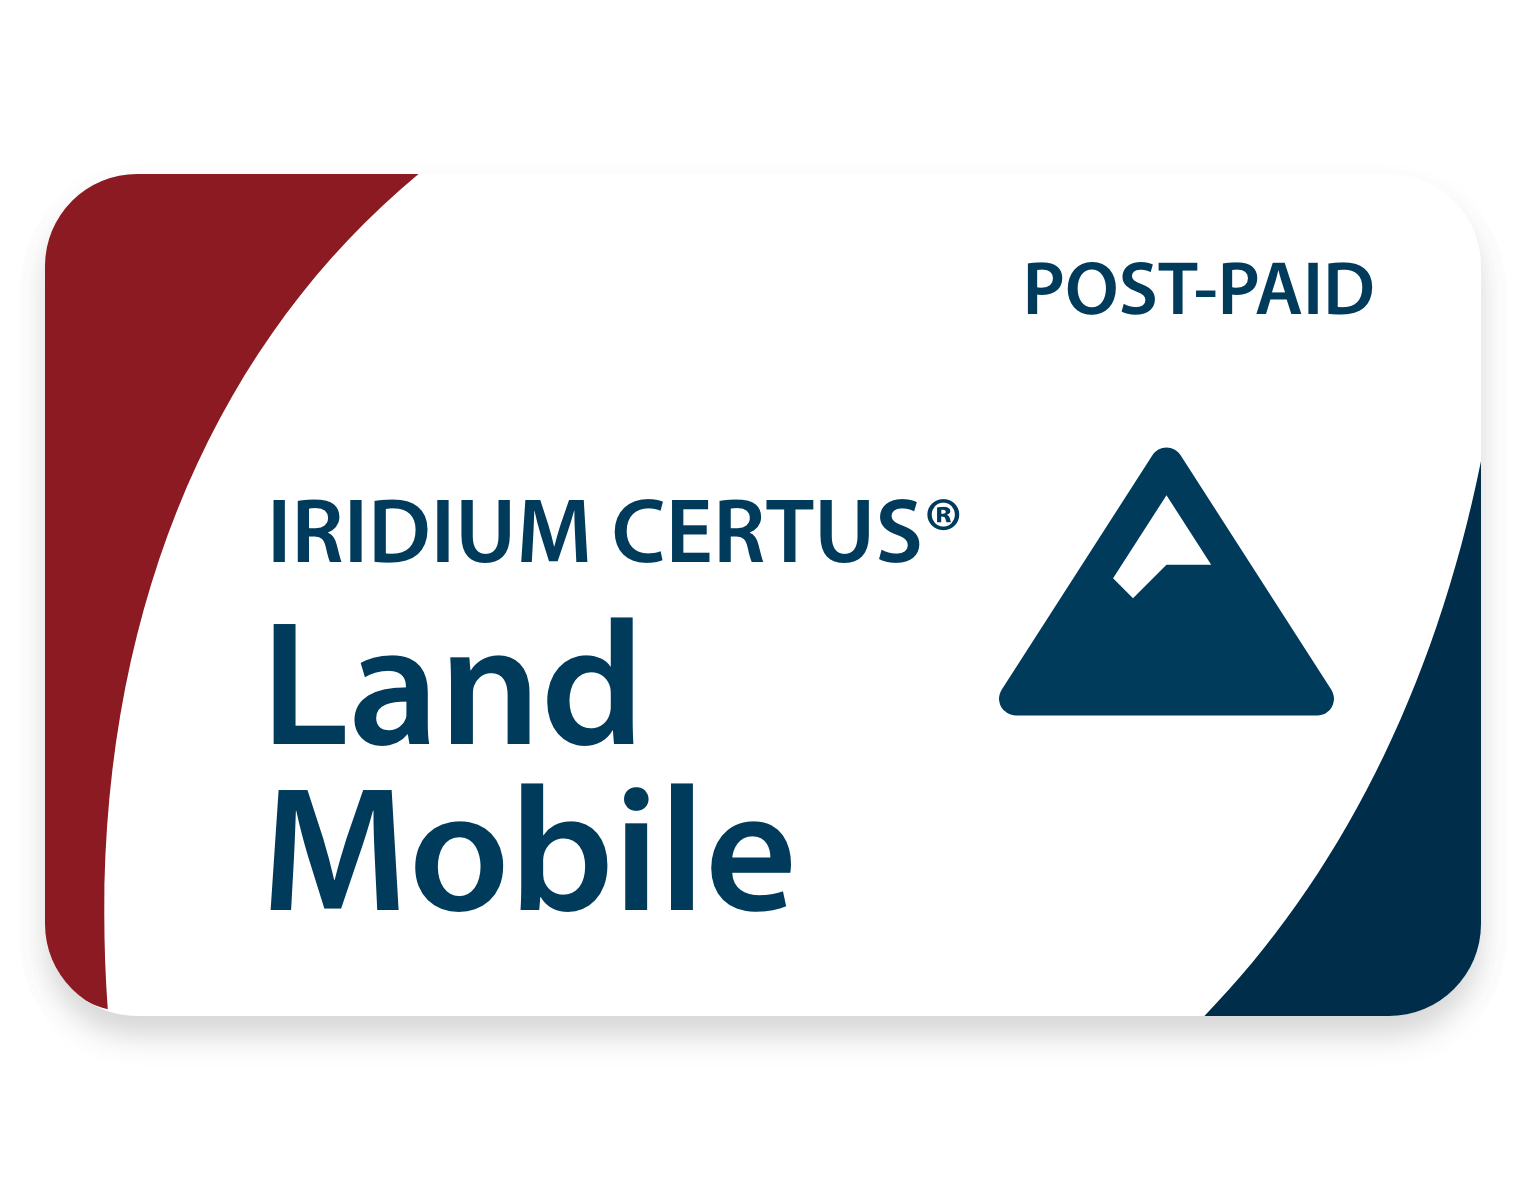 iridium certus post-paid land mobile airtime plan